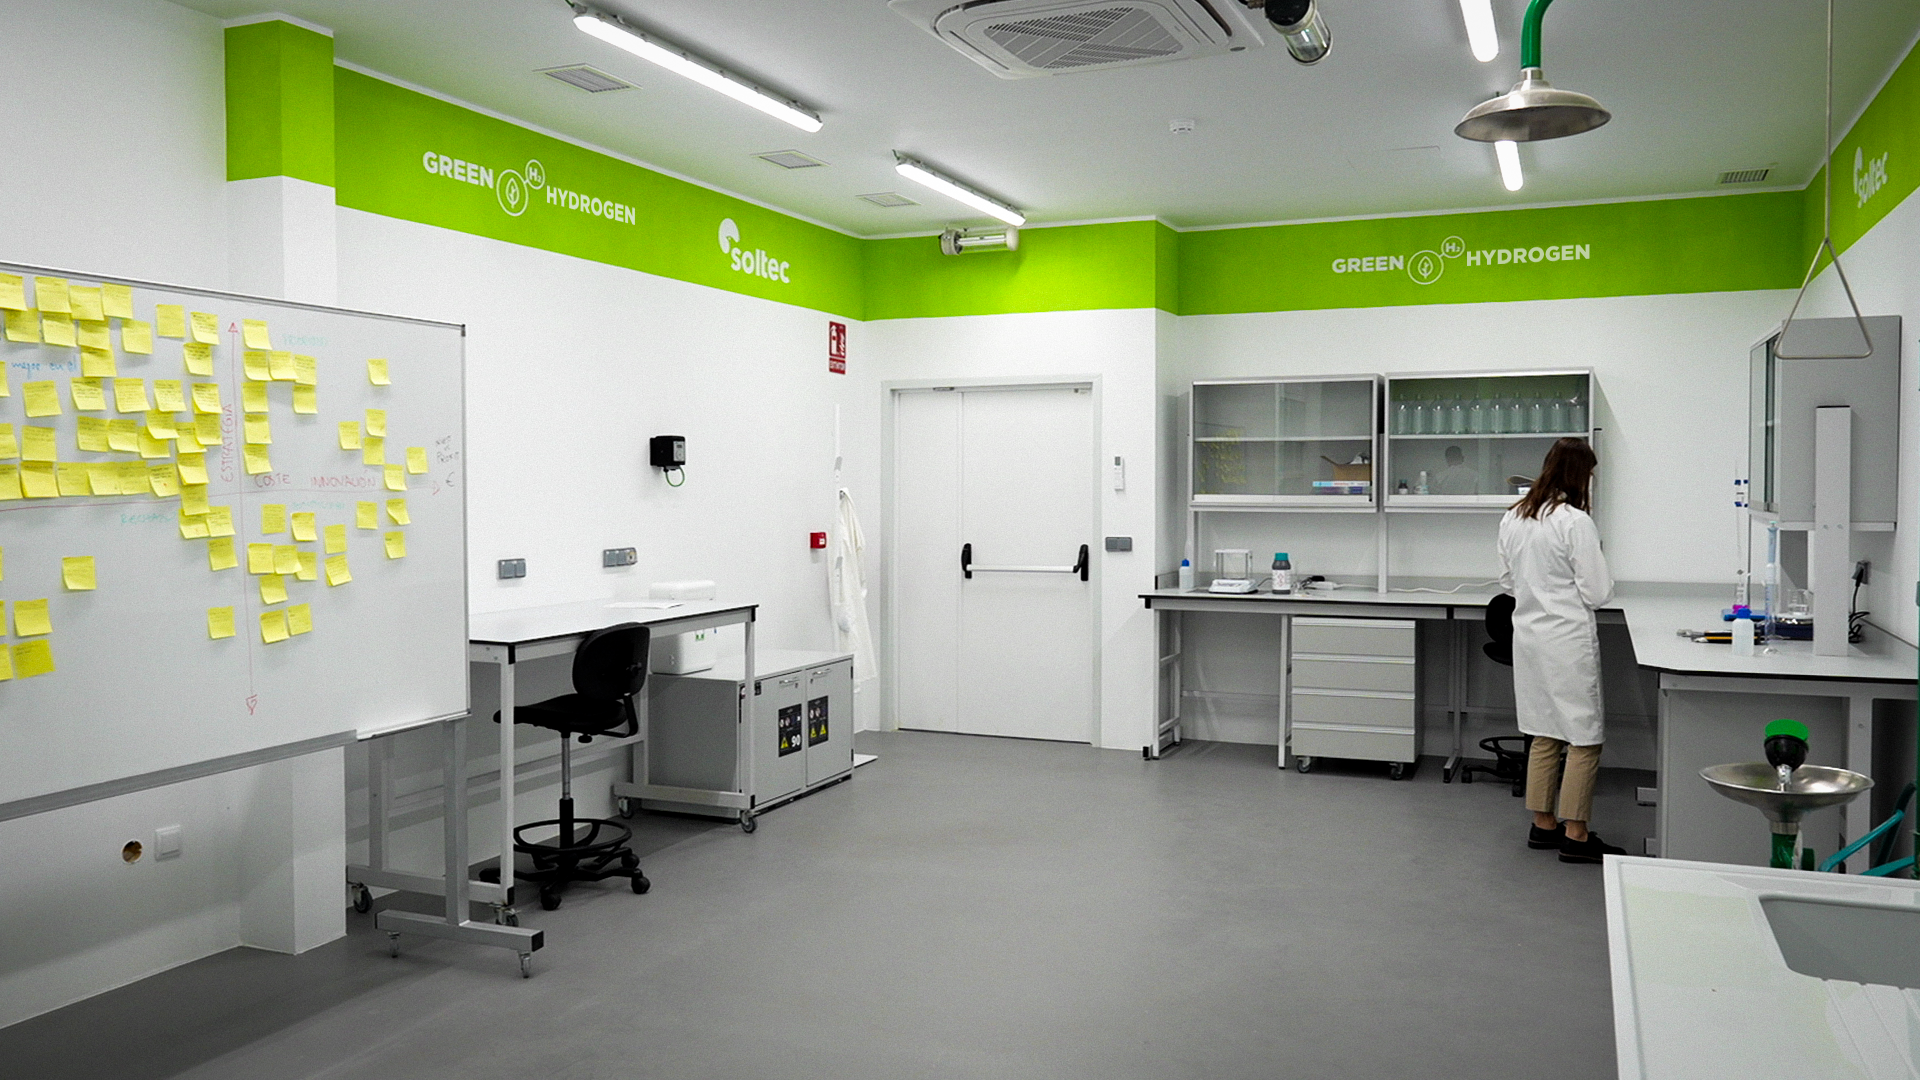 Soltec's new green hydrogen laboratory facilities